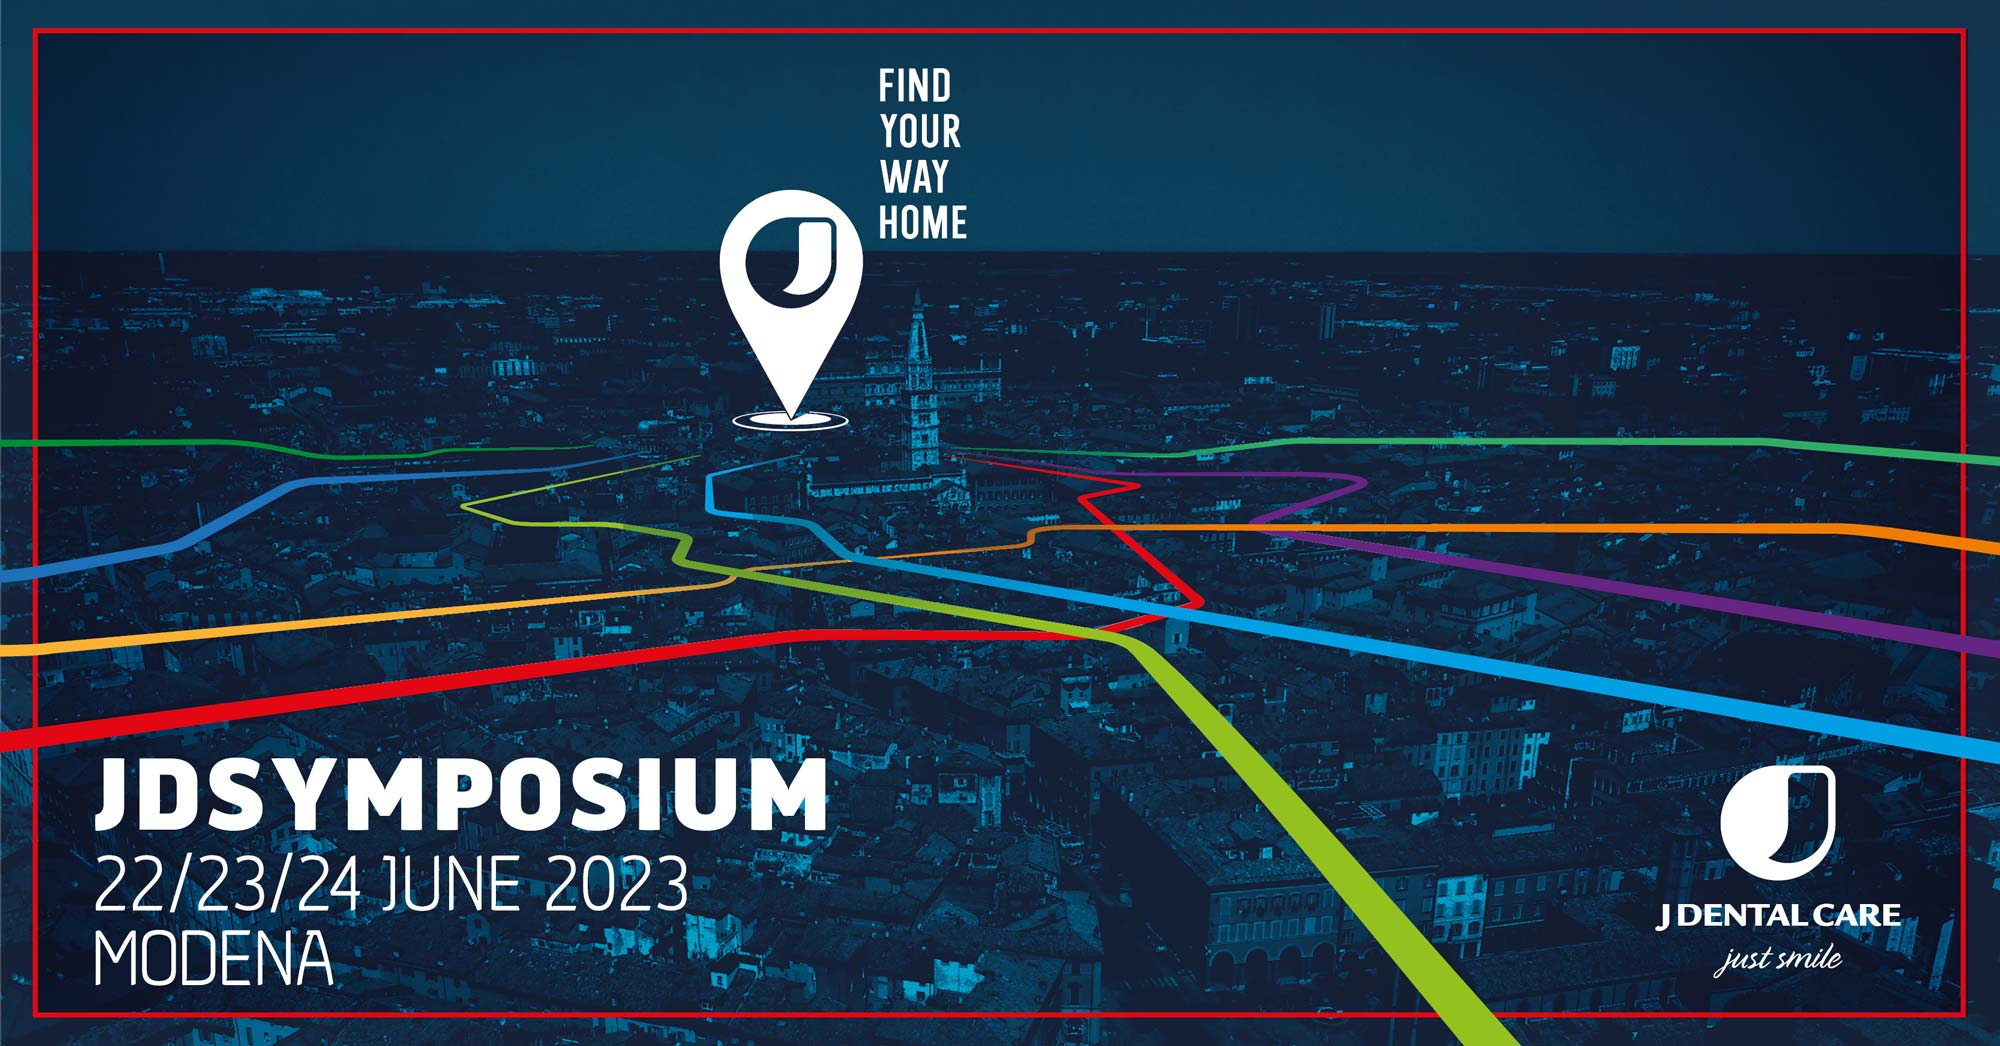 JDSymposium 2023, June 23-24 – Modena – Find your way home.